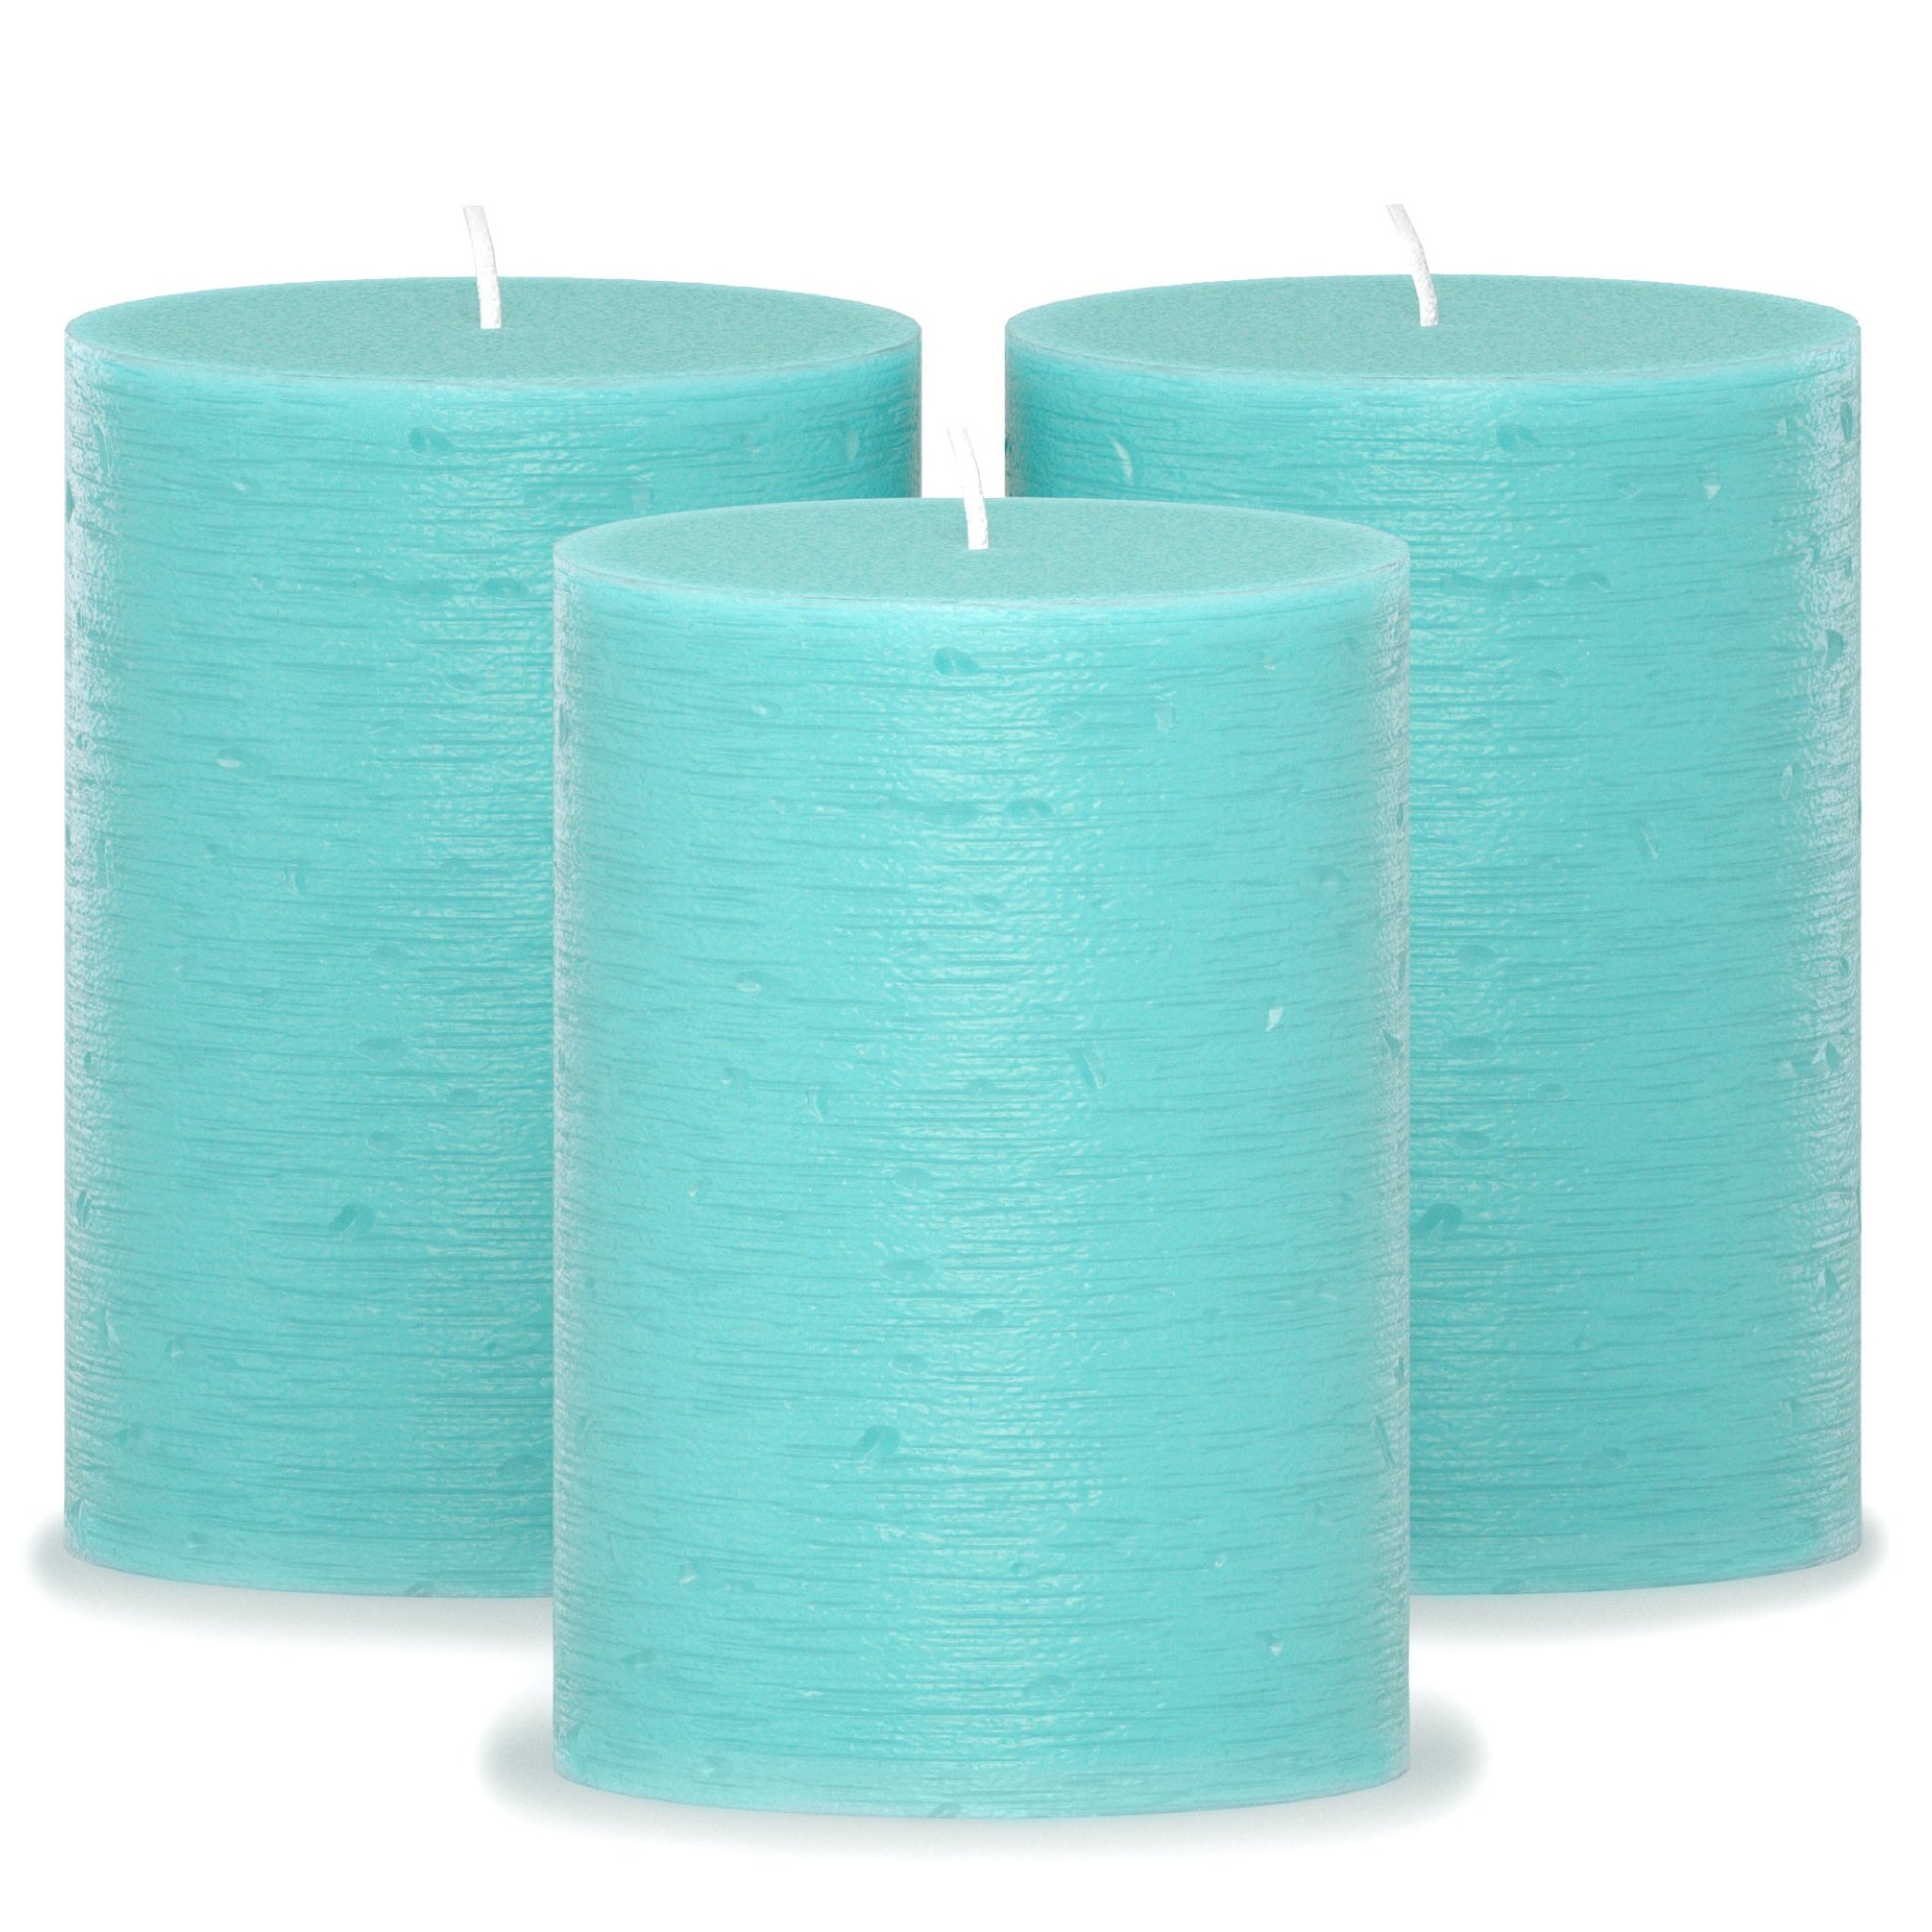 CANDWAX Turquoise Pillar Candles 4" - Set of 3pcs